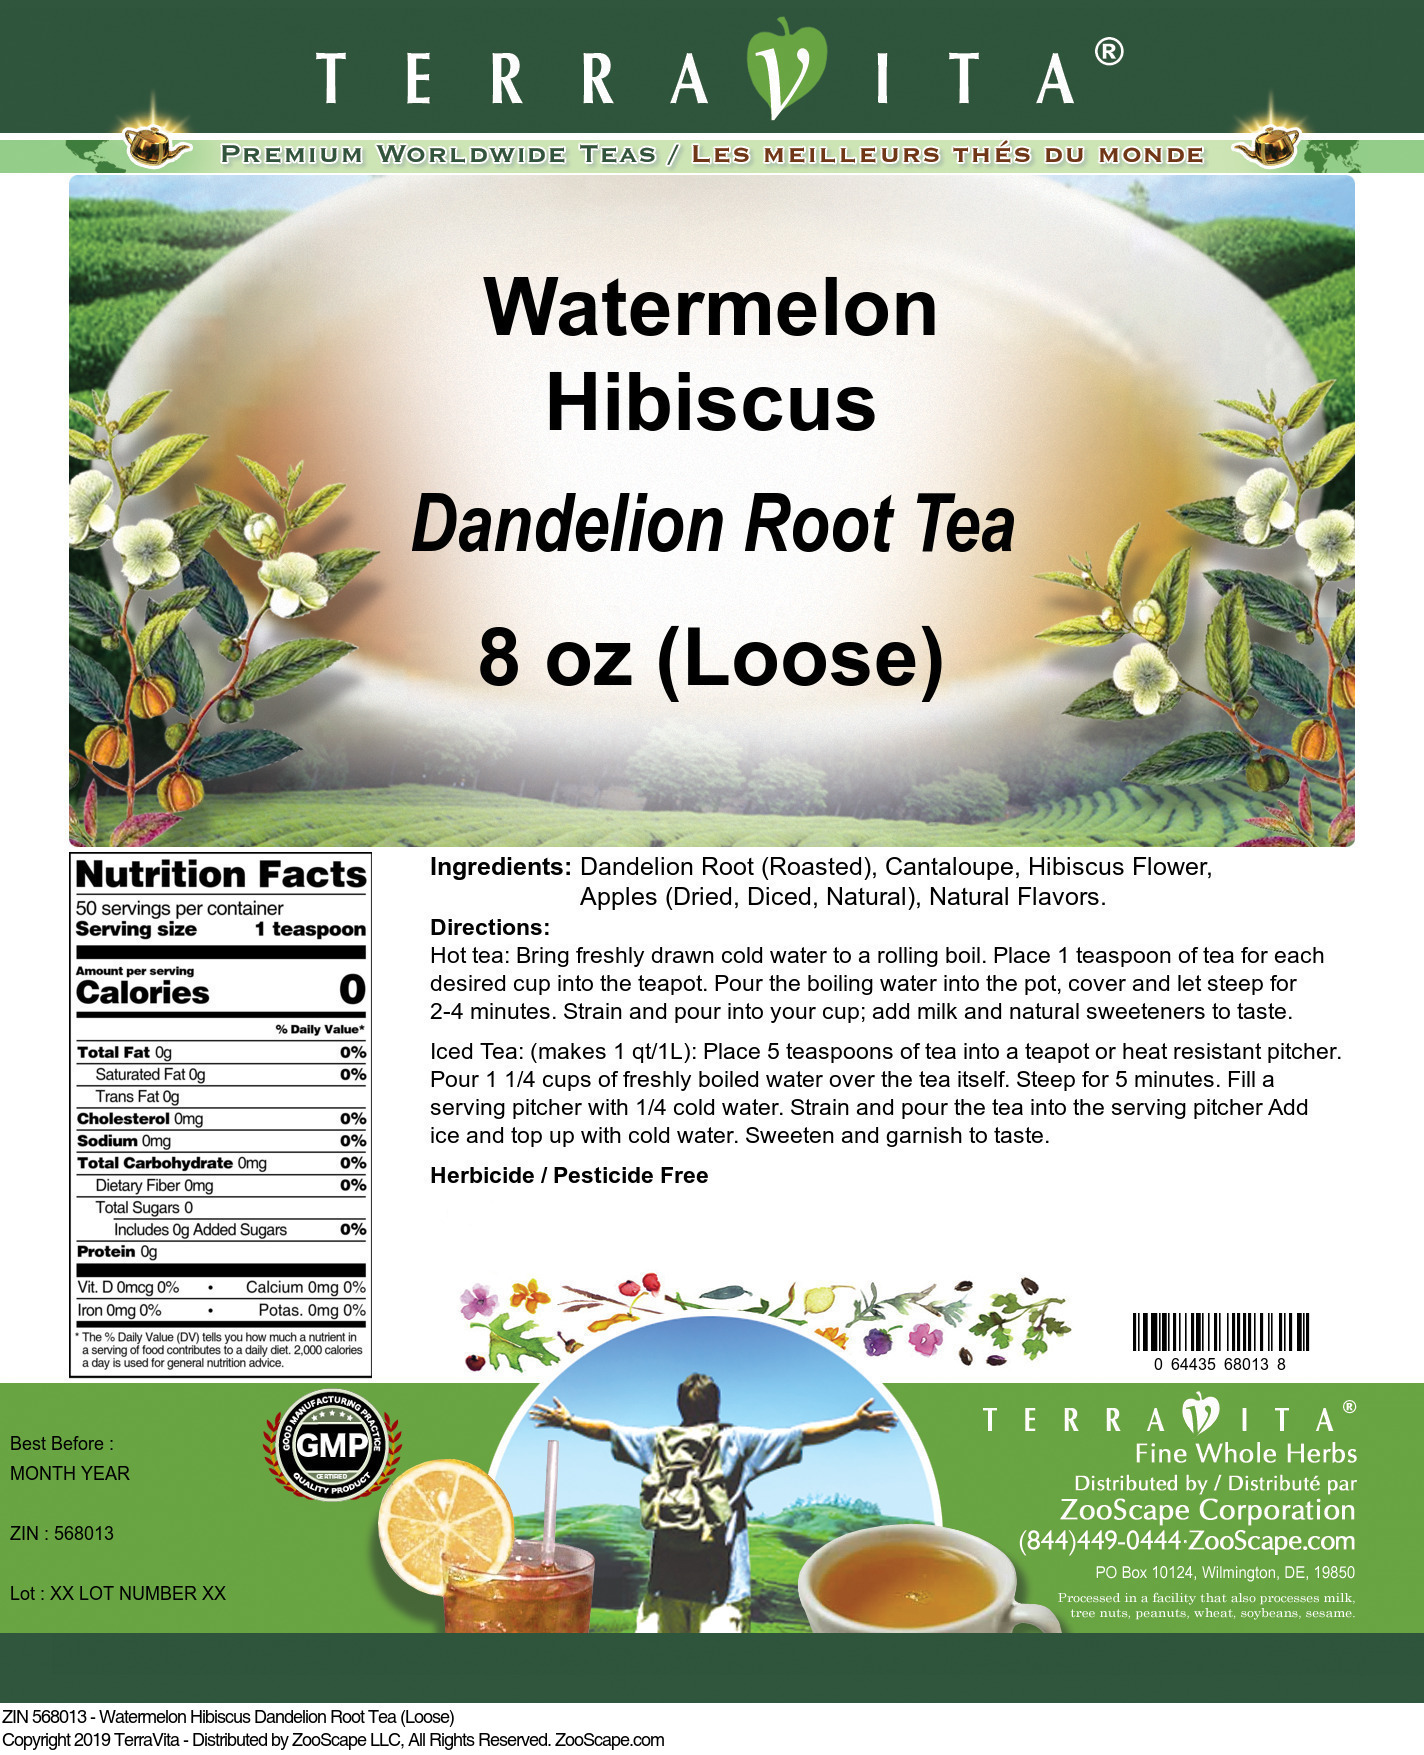 Watermelon Hibiscus Dandelion Root Tea (Loose) - Label